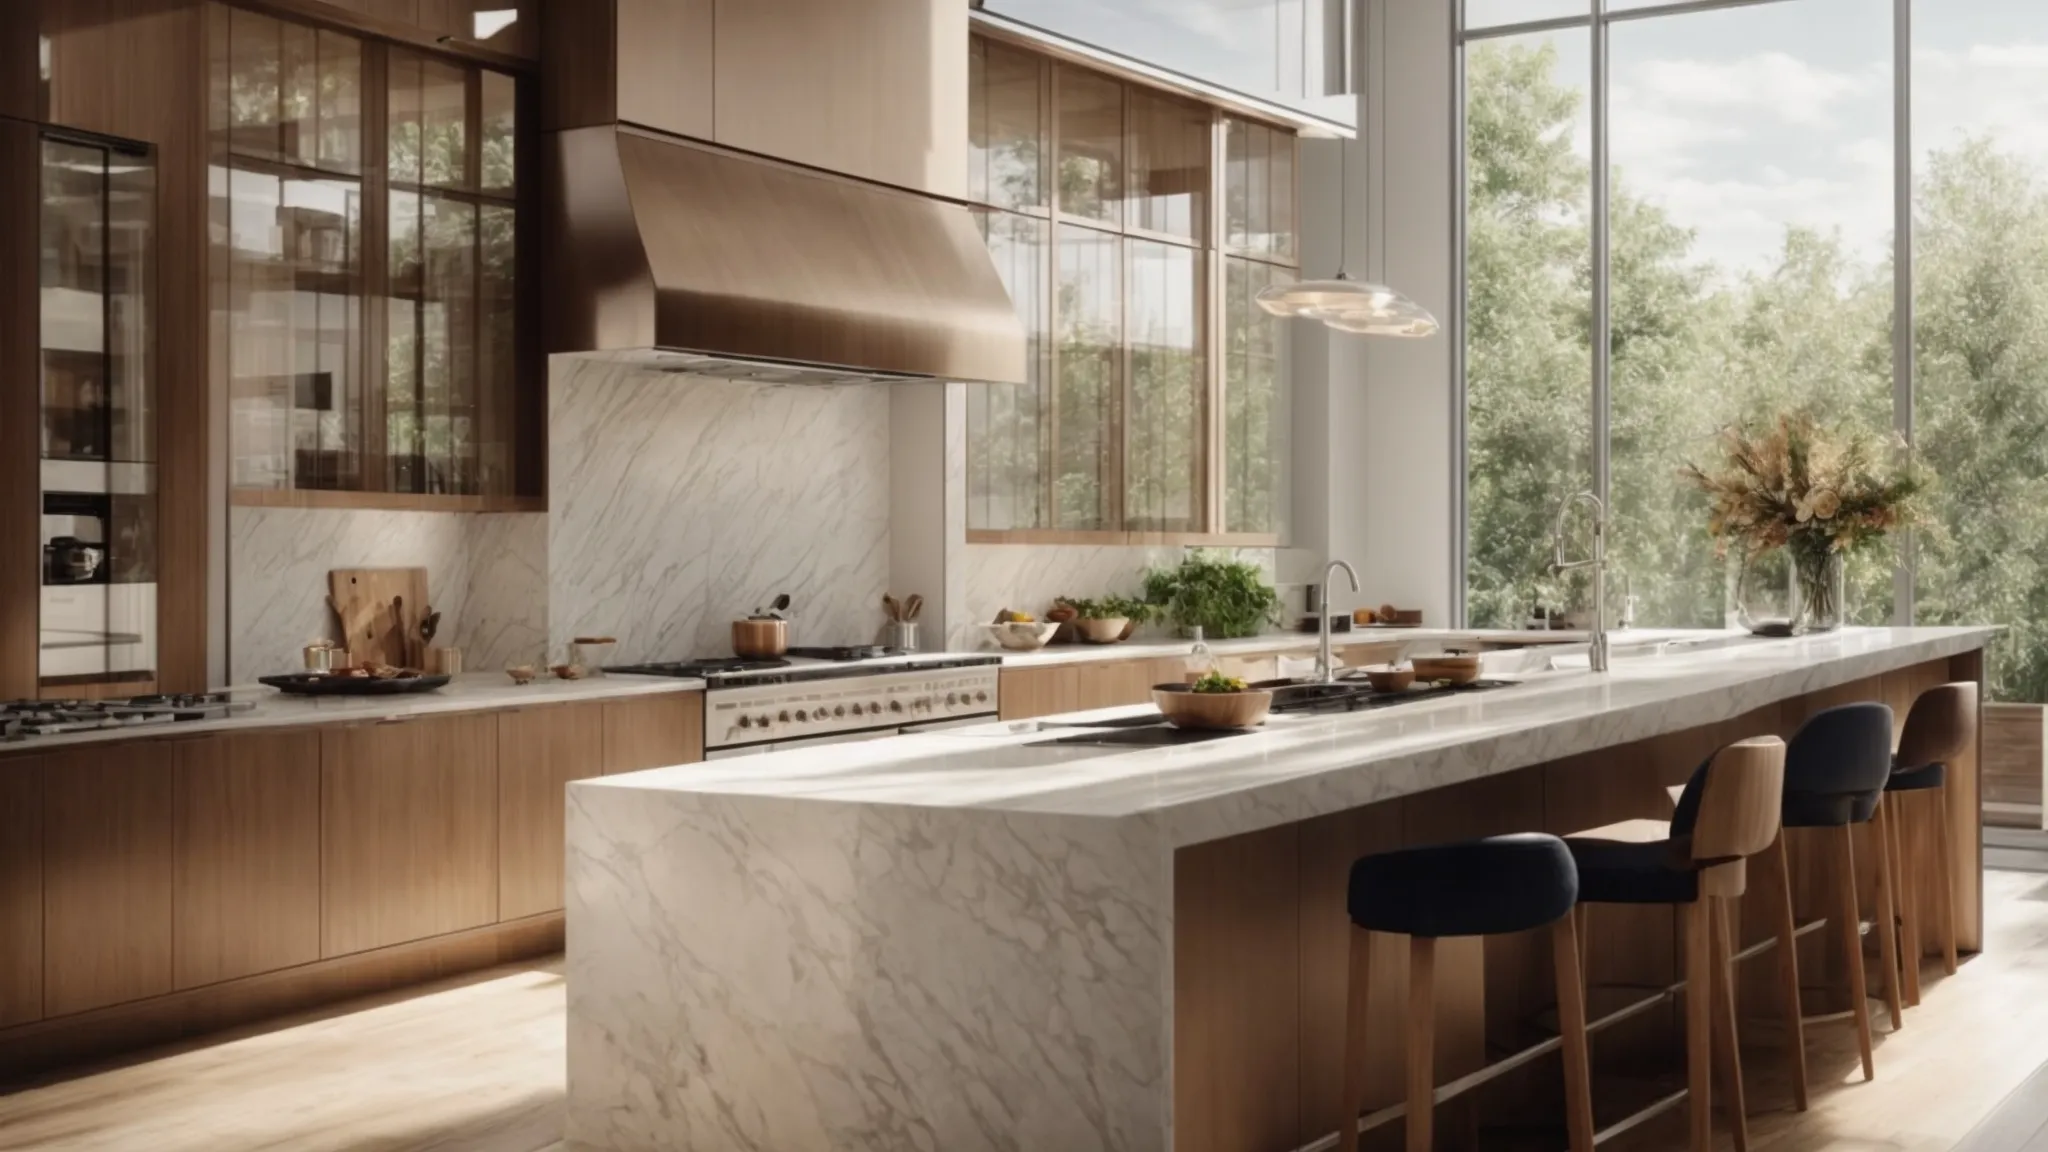 a sleek kitchen showcases a polished quartz countertop radiating elegance beside a large window.